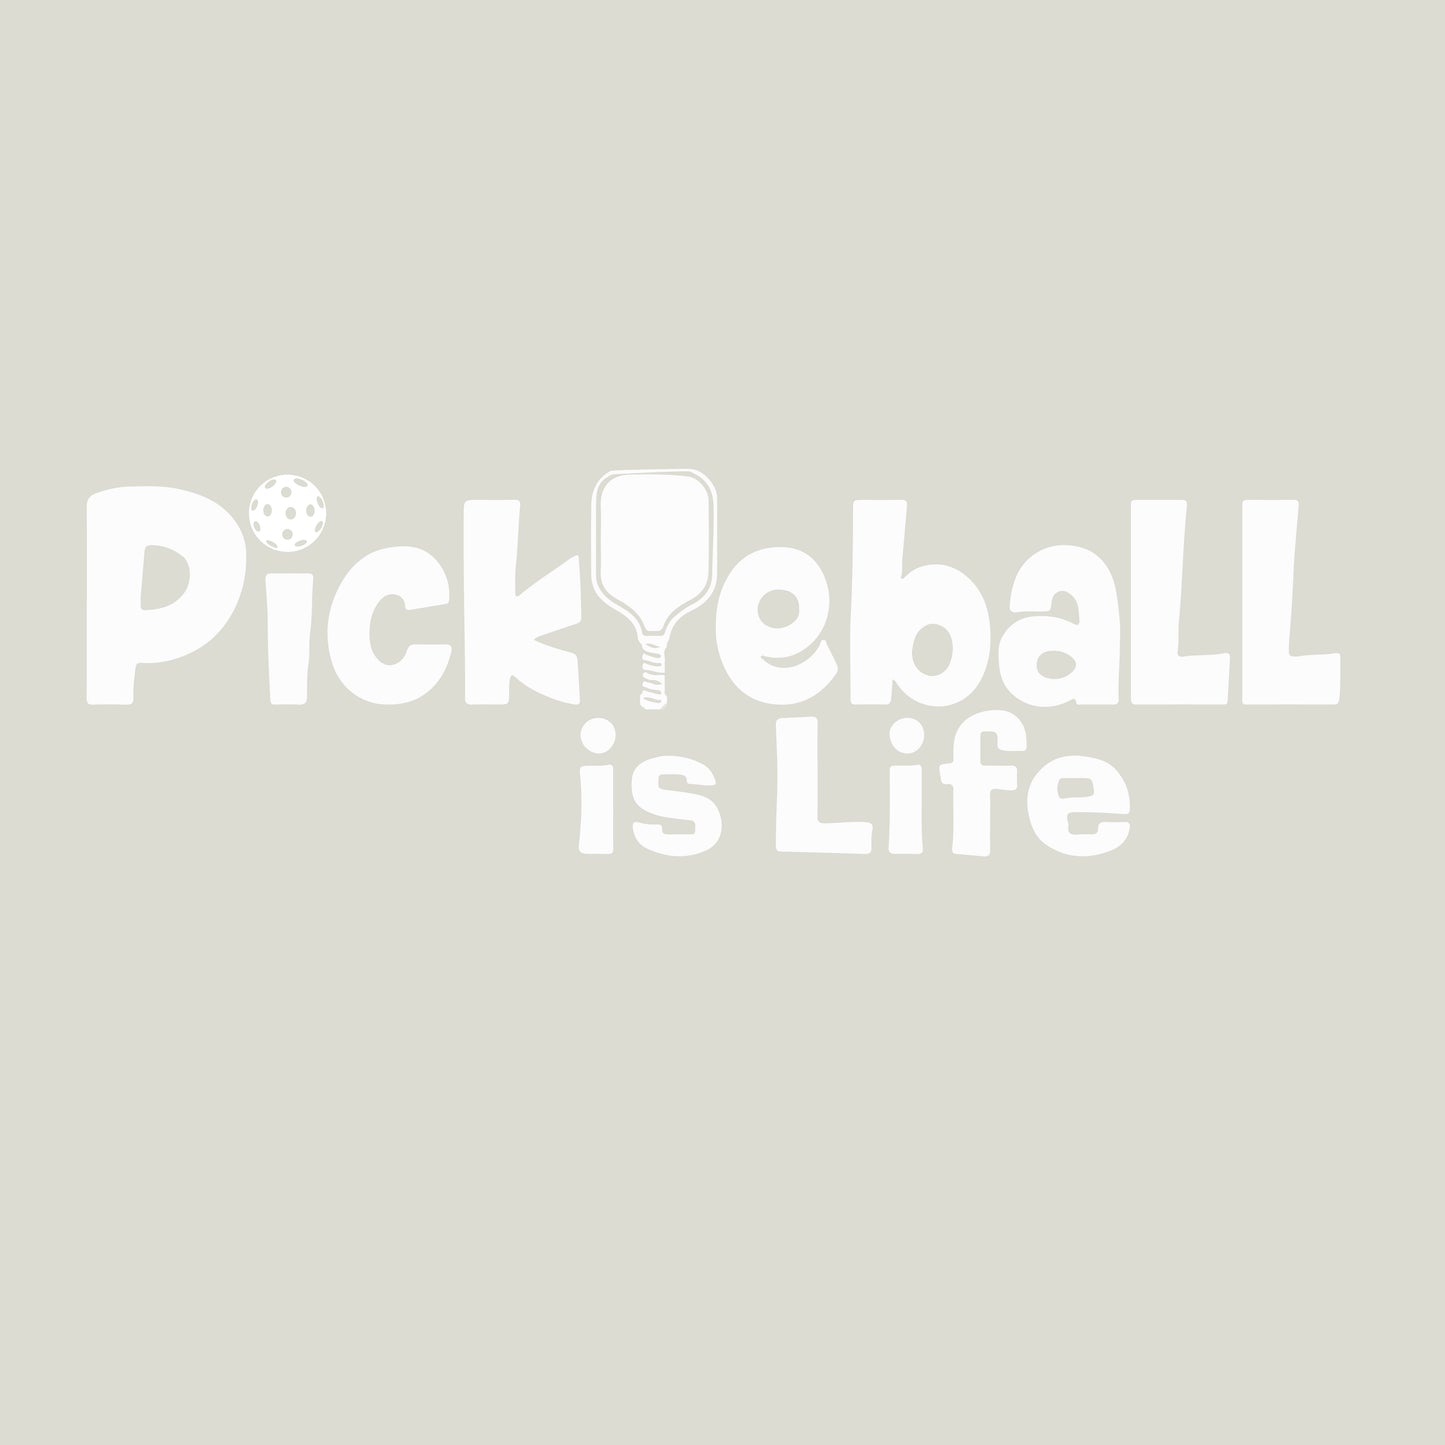 Pickleball is Life | Women's Split Back or Tied Back Pickleball Tank | 80/20 Nylon Spandex Mix